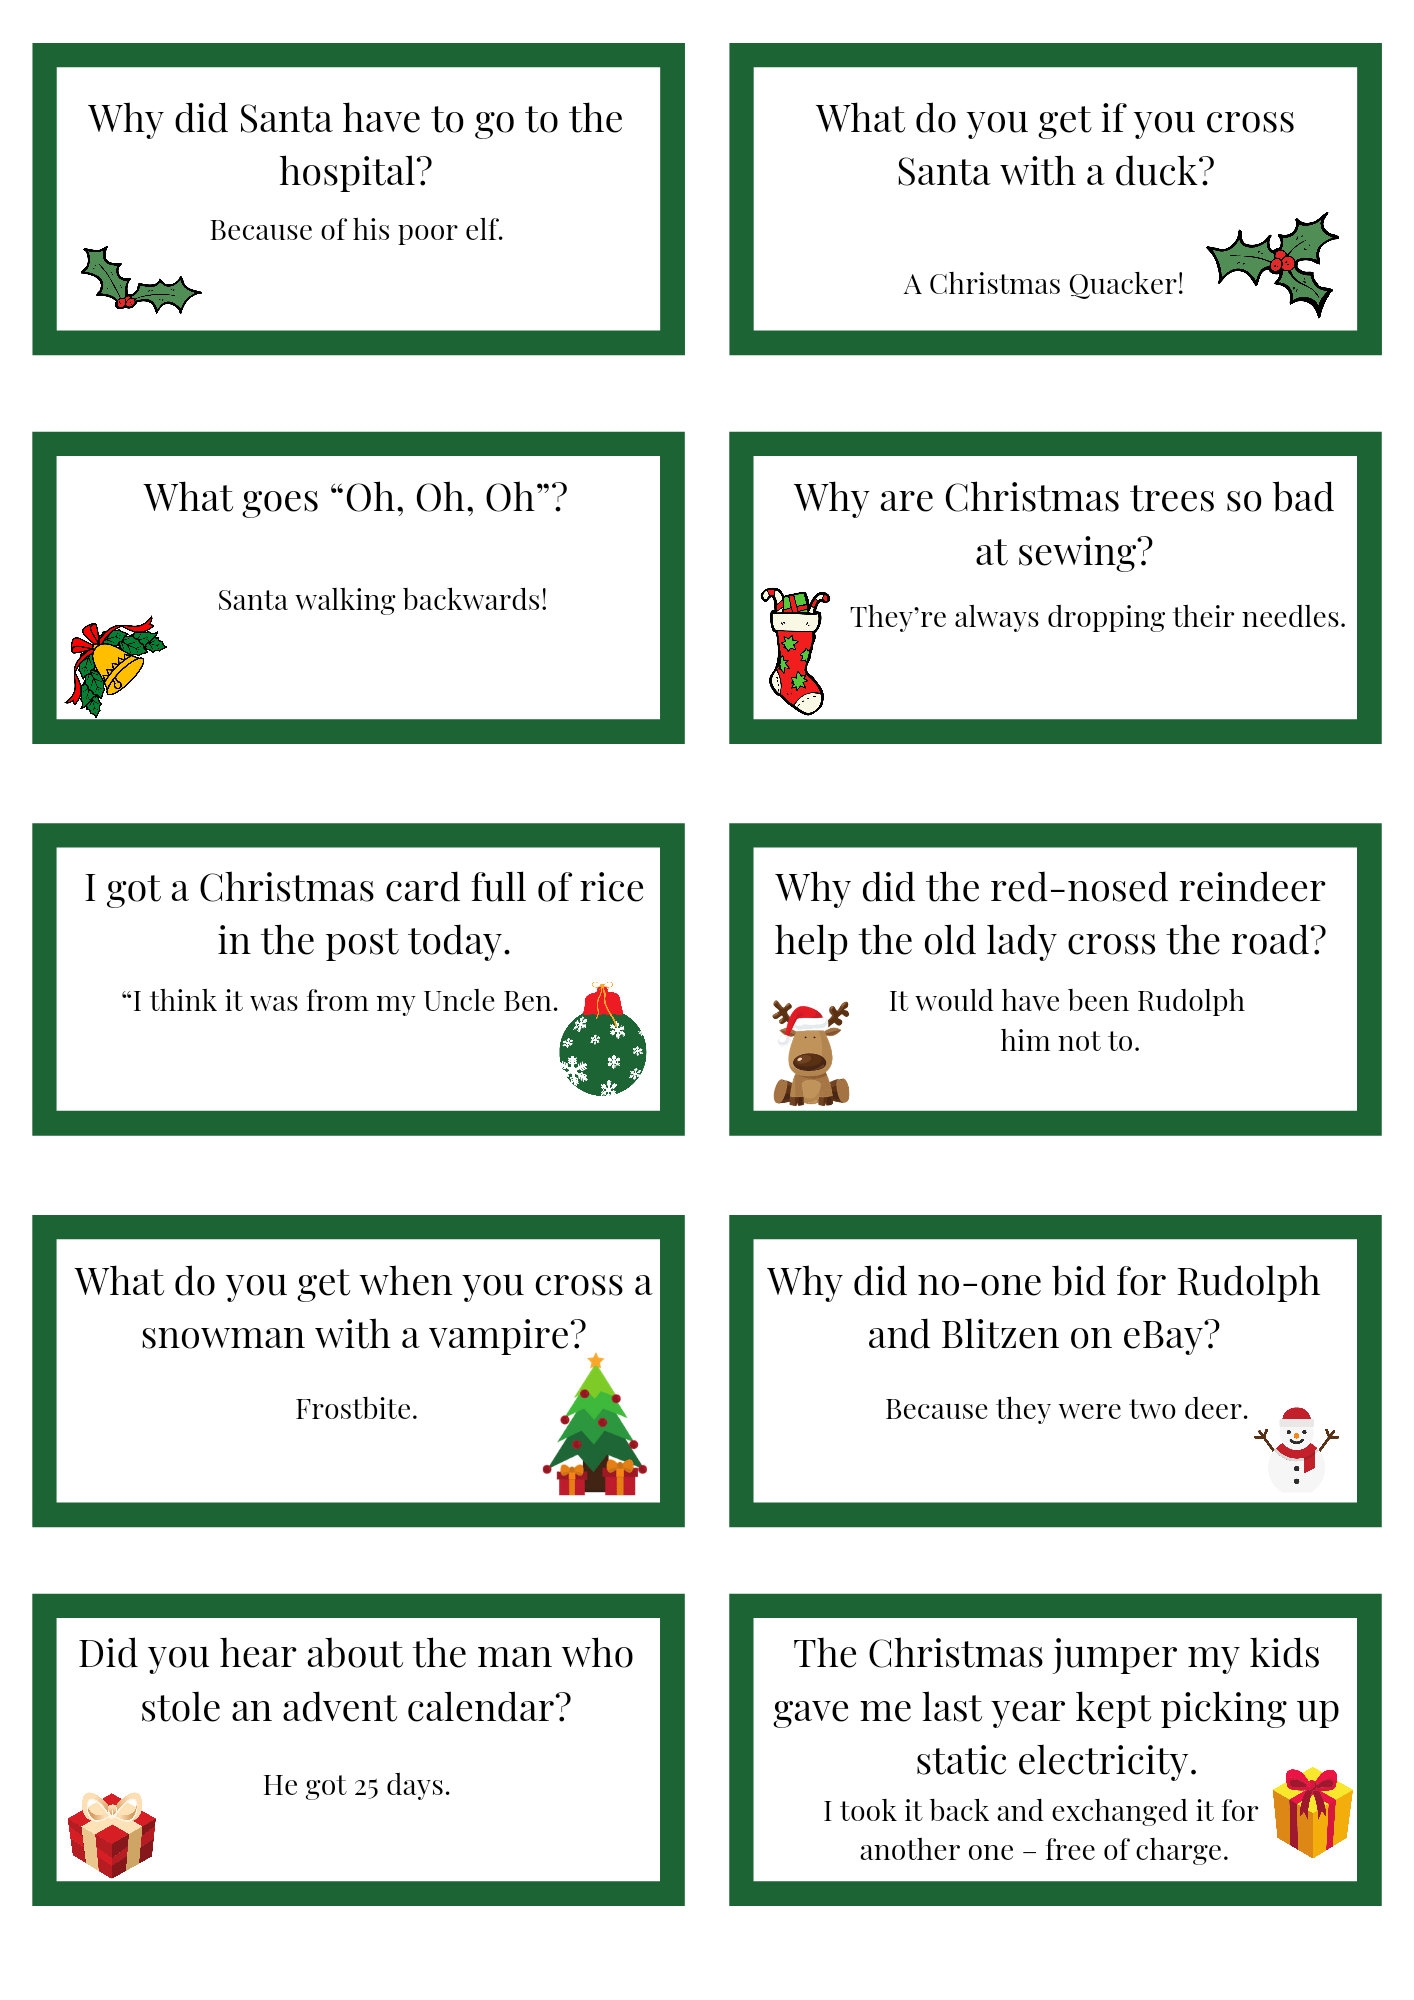 Christmas Cracker Jokes And Bucket List Digital Download Etsy